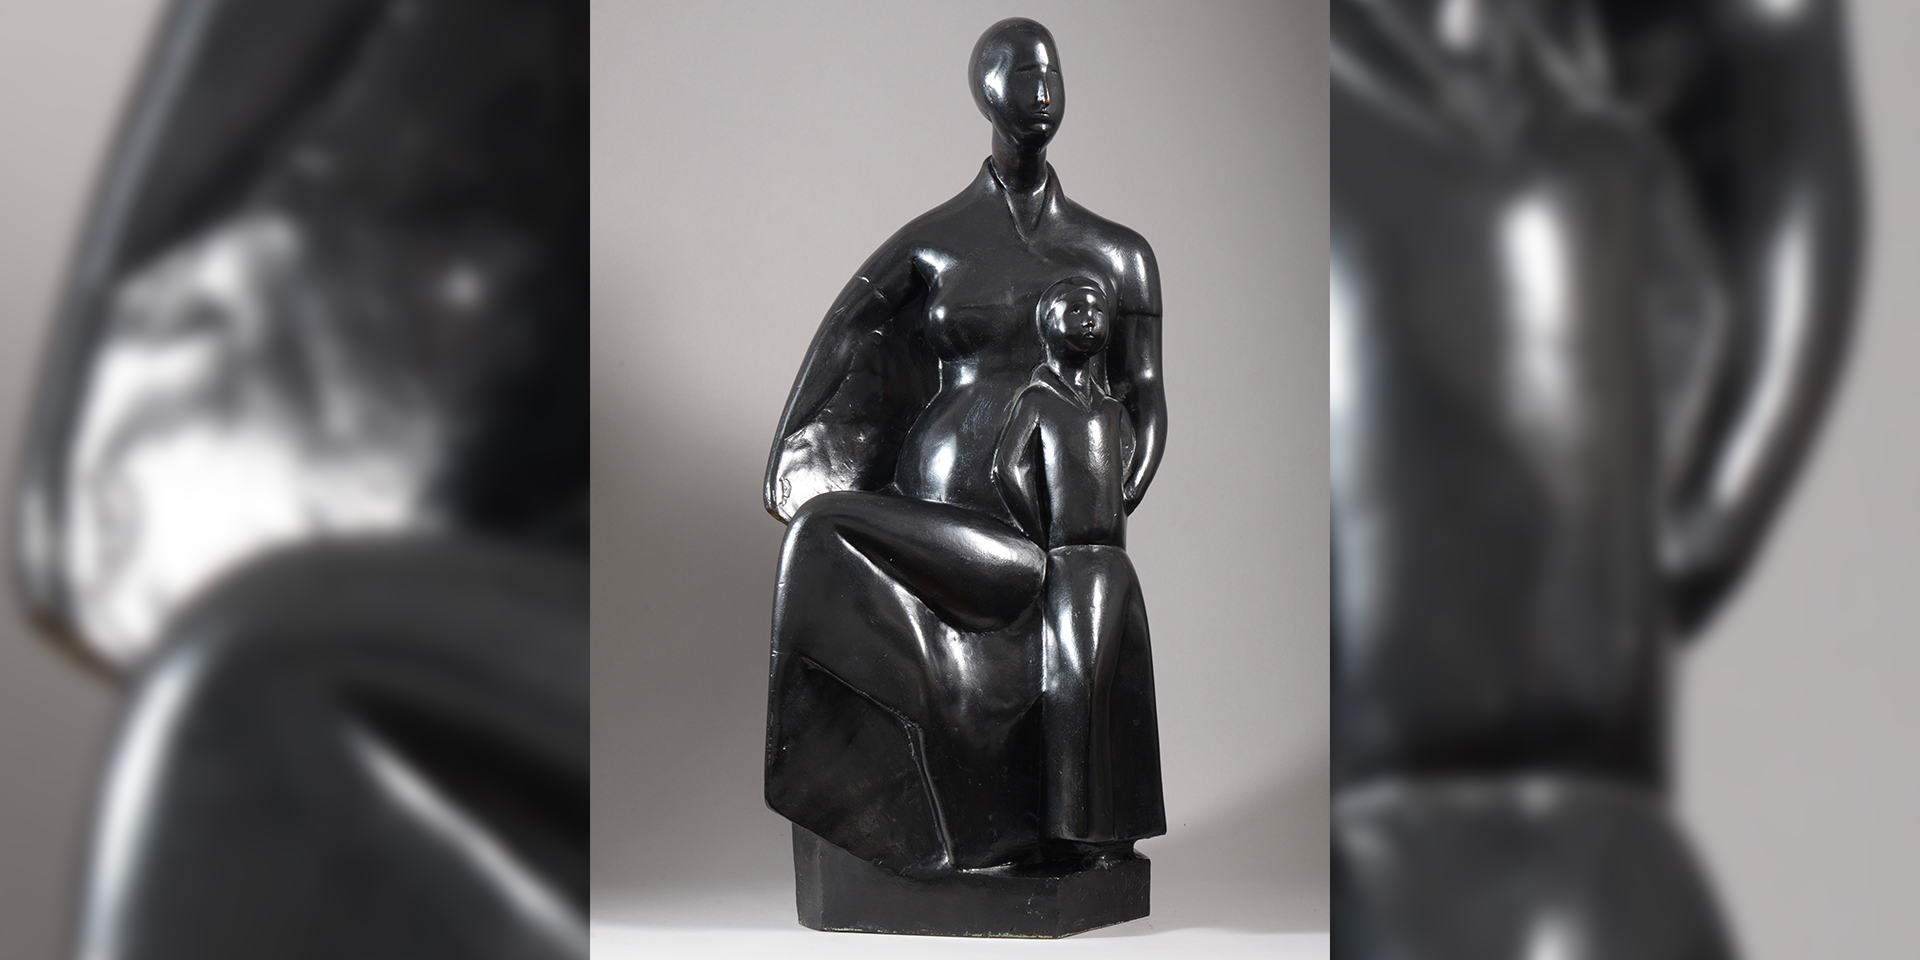 Chana Orloff, Moi et mon fils, 1927, bronze. © Adagp, Paris, 2021 / photo Atelier Chana orloff